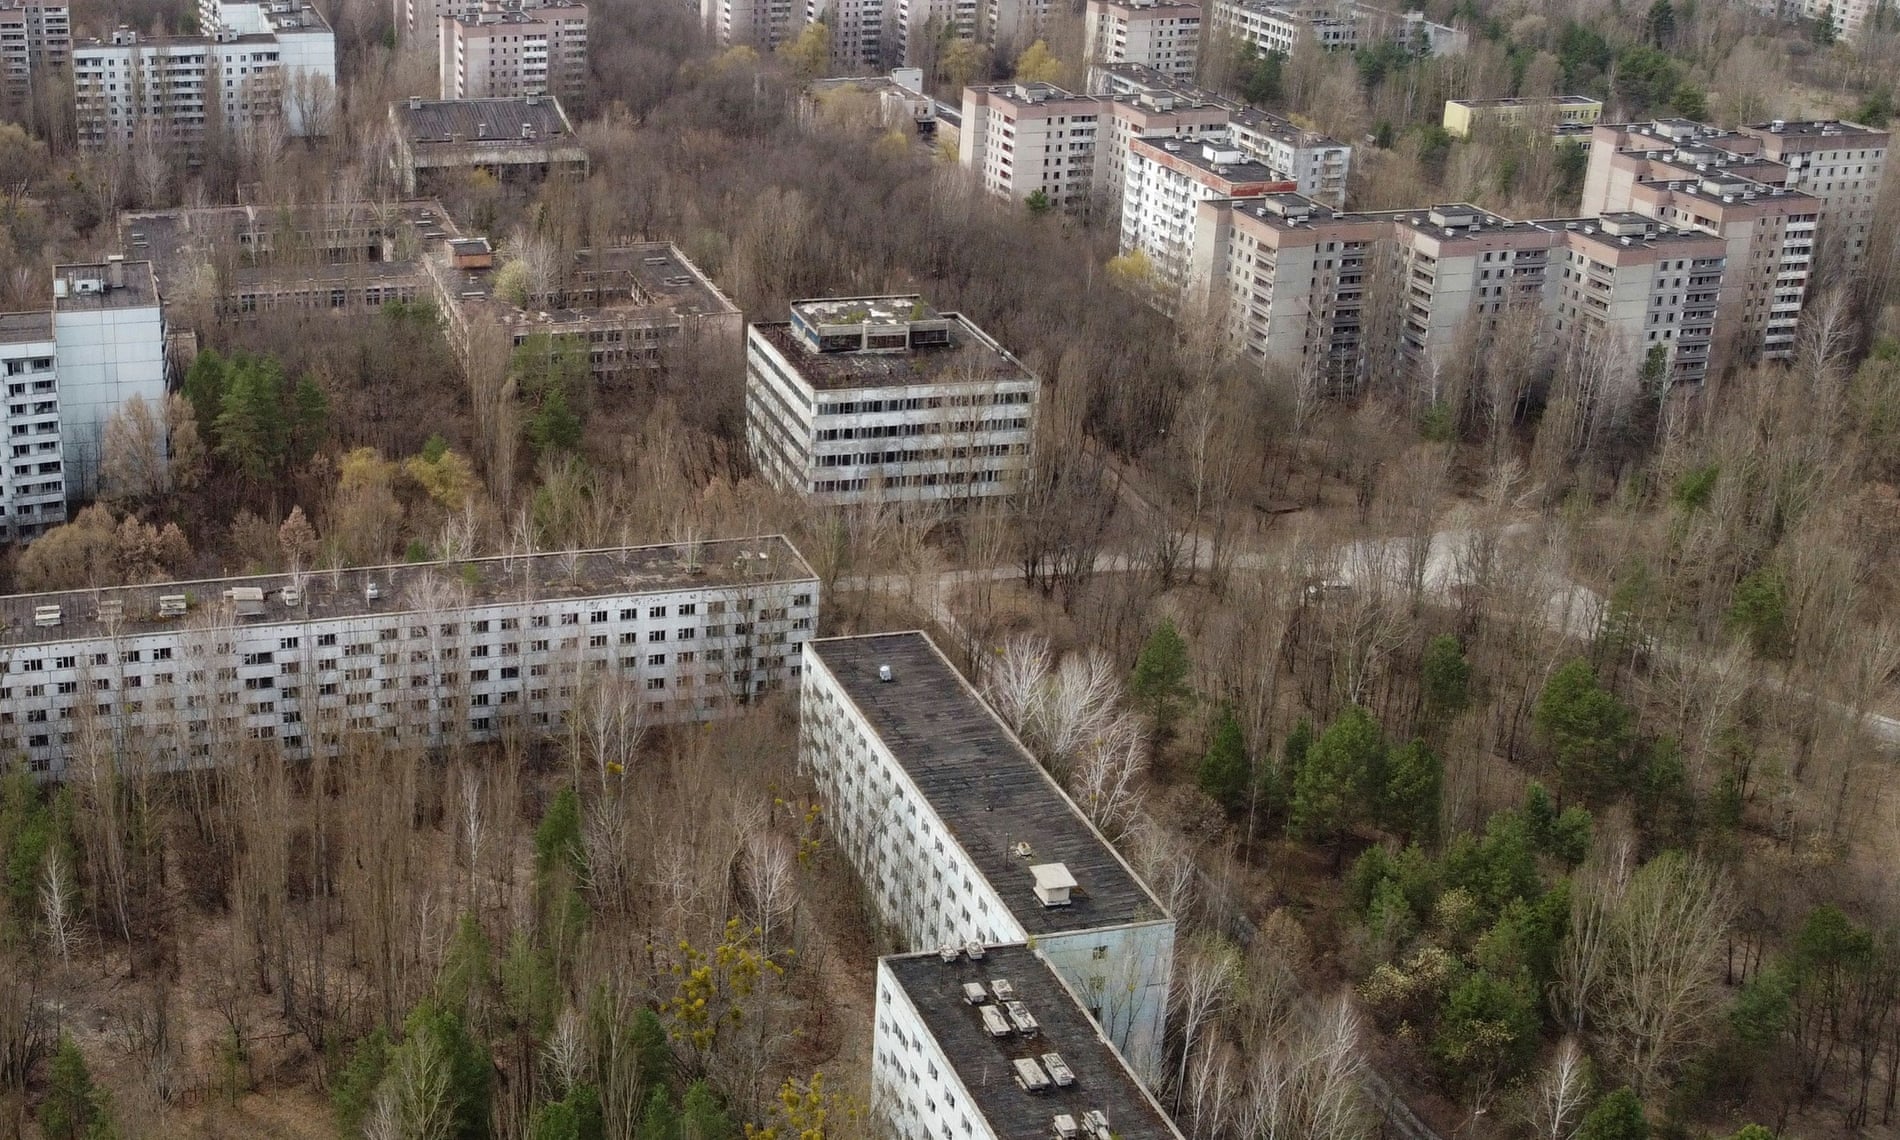 The abandoned city of Pripyat near the Chernobyl nuclear power plant, Ukraine.